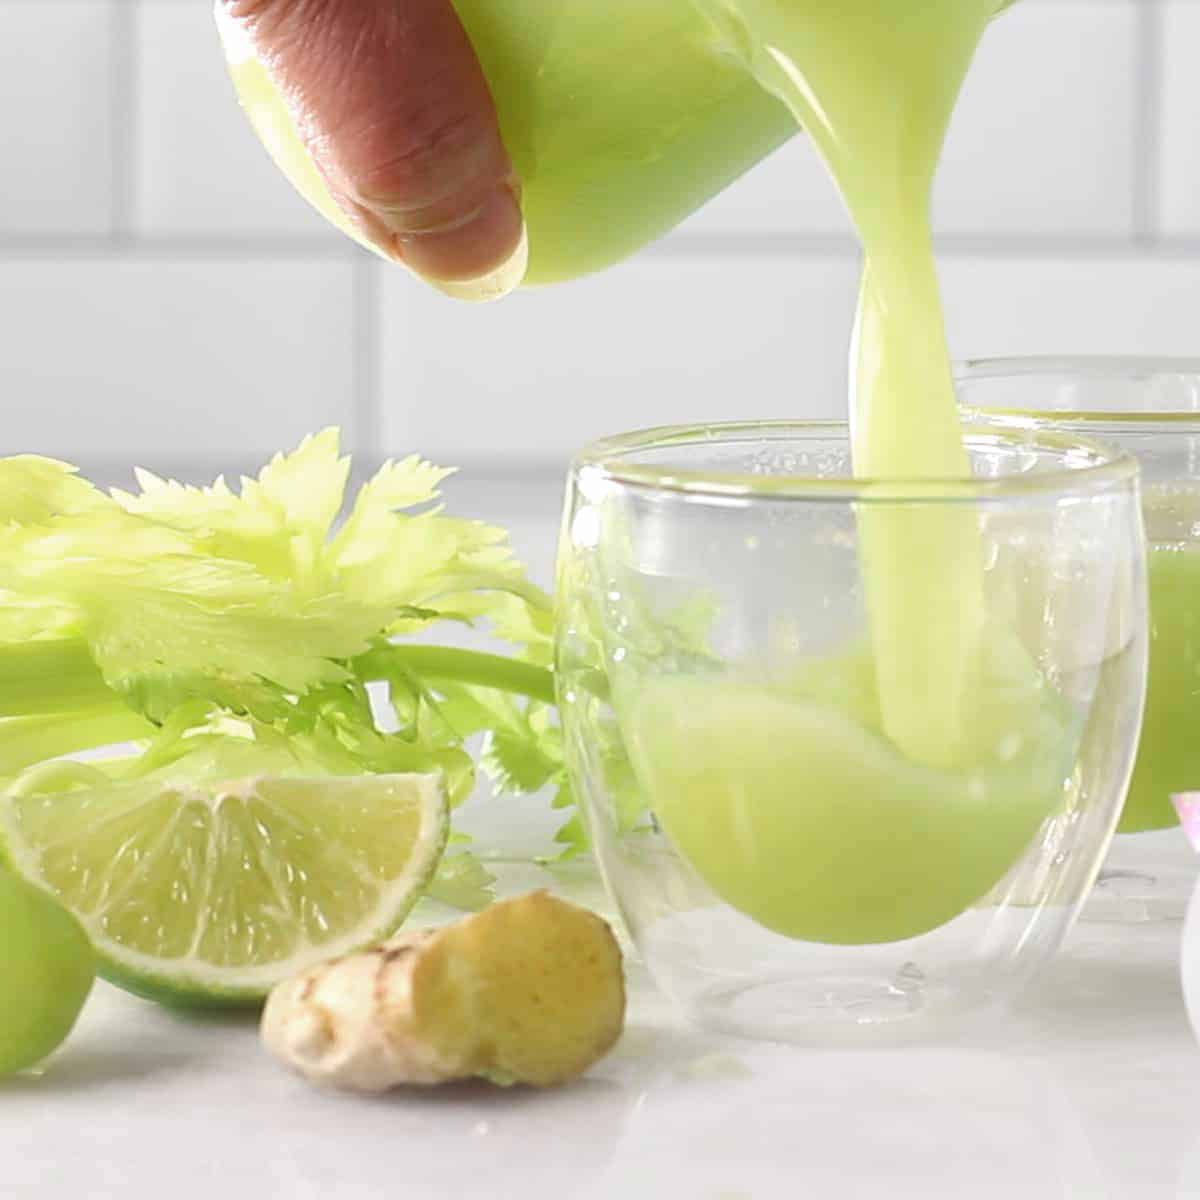 celery juice poured into glass